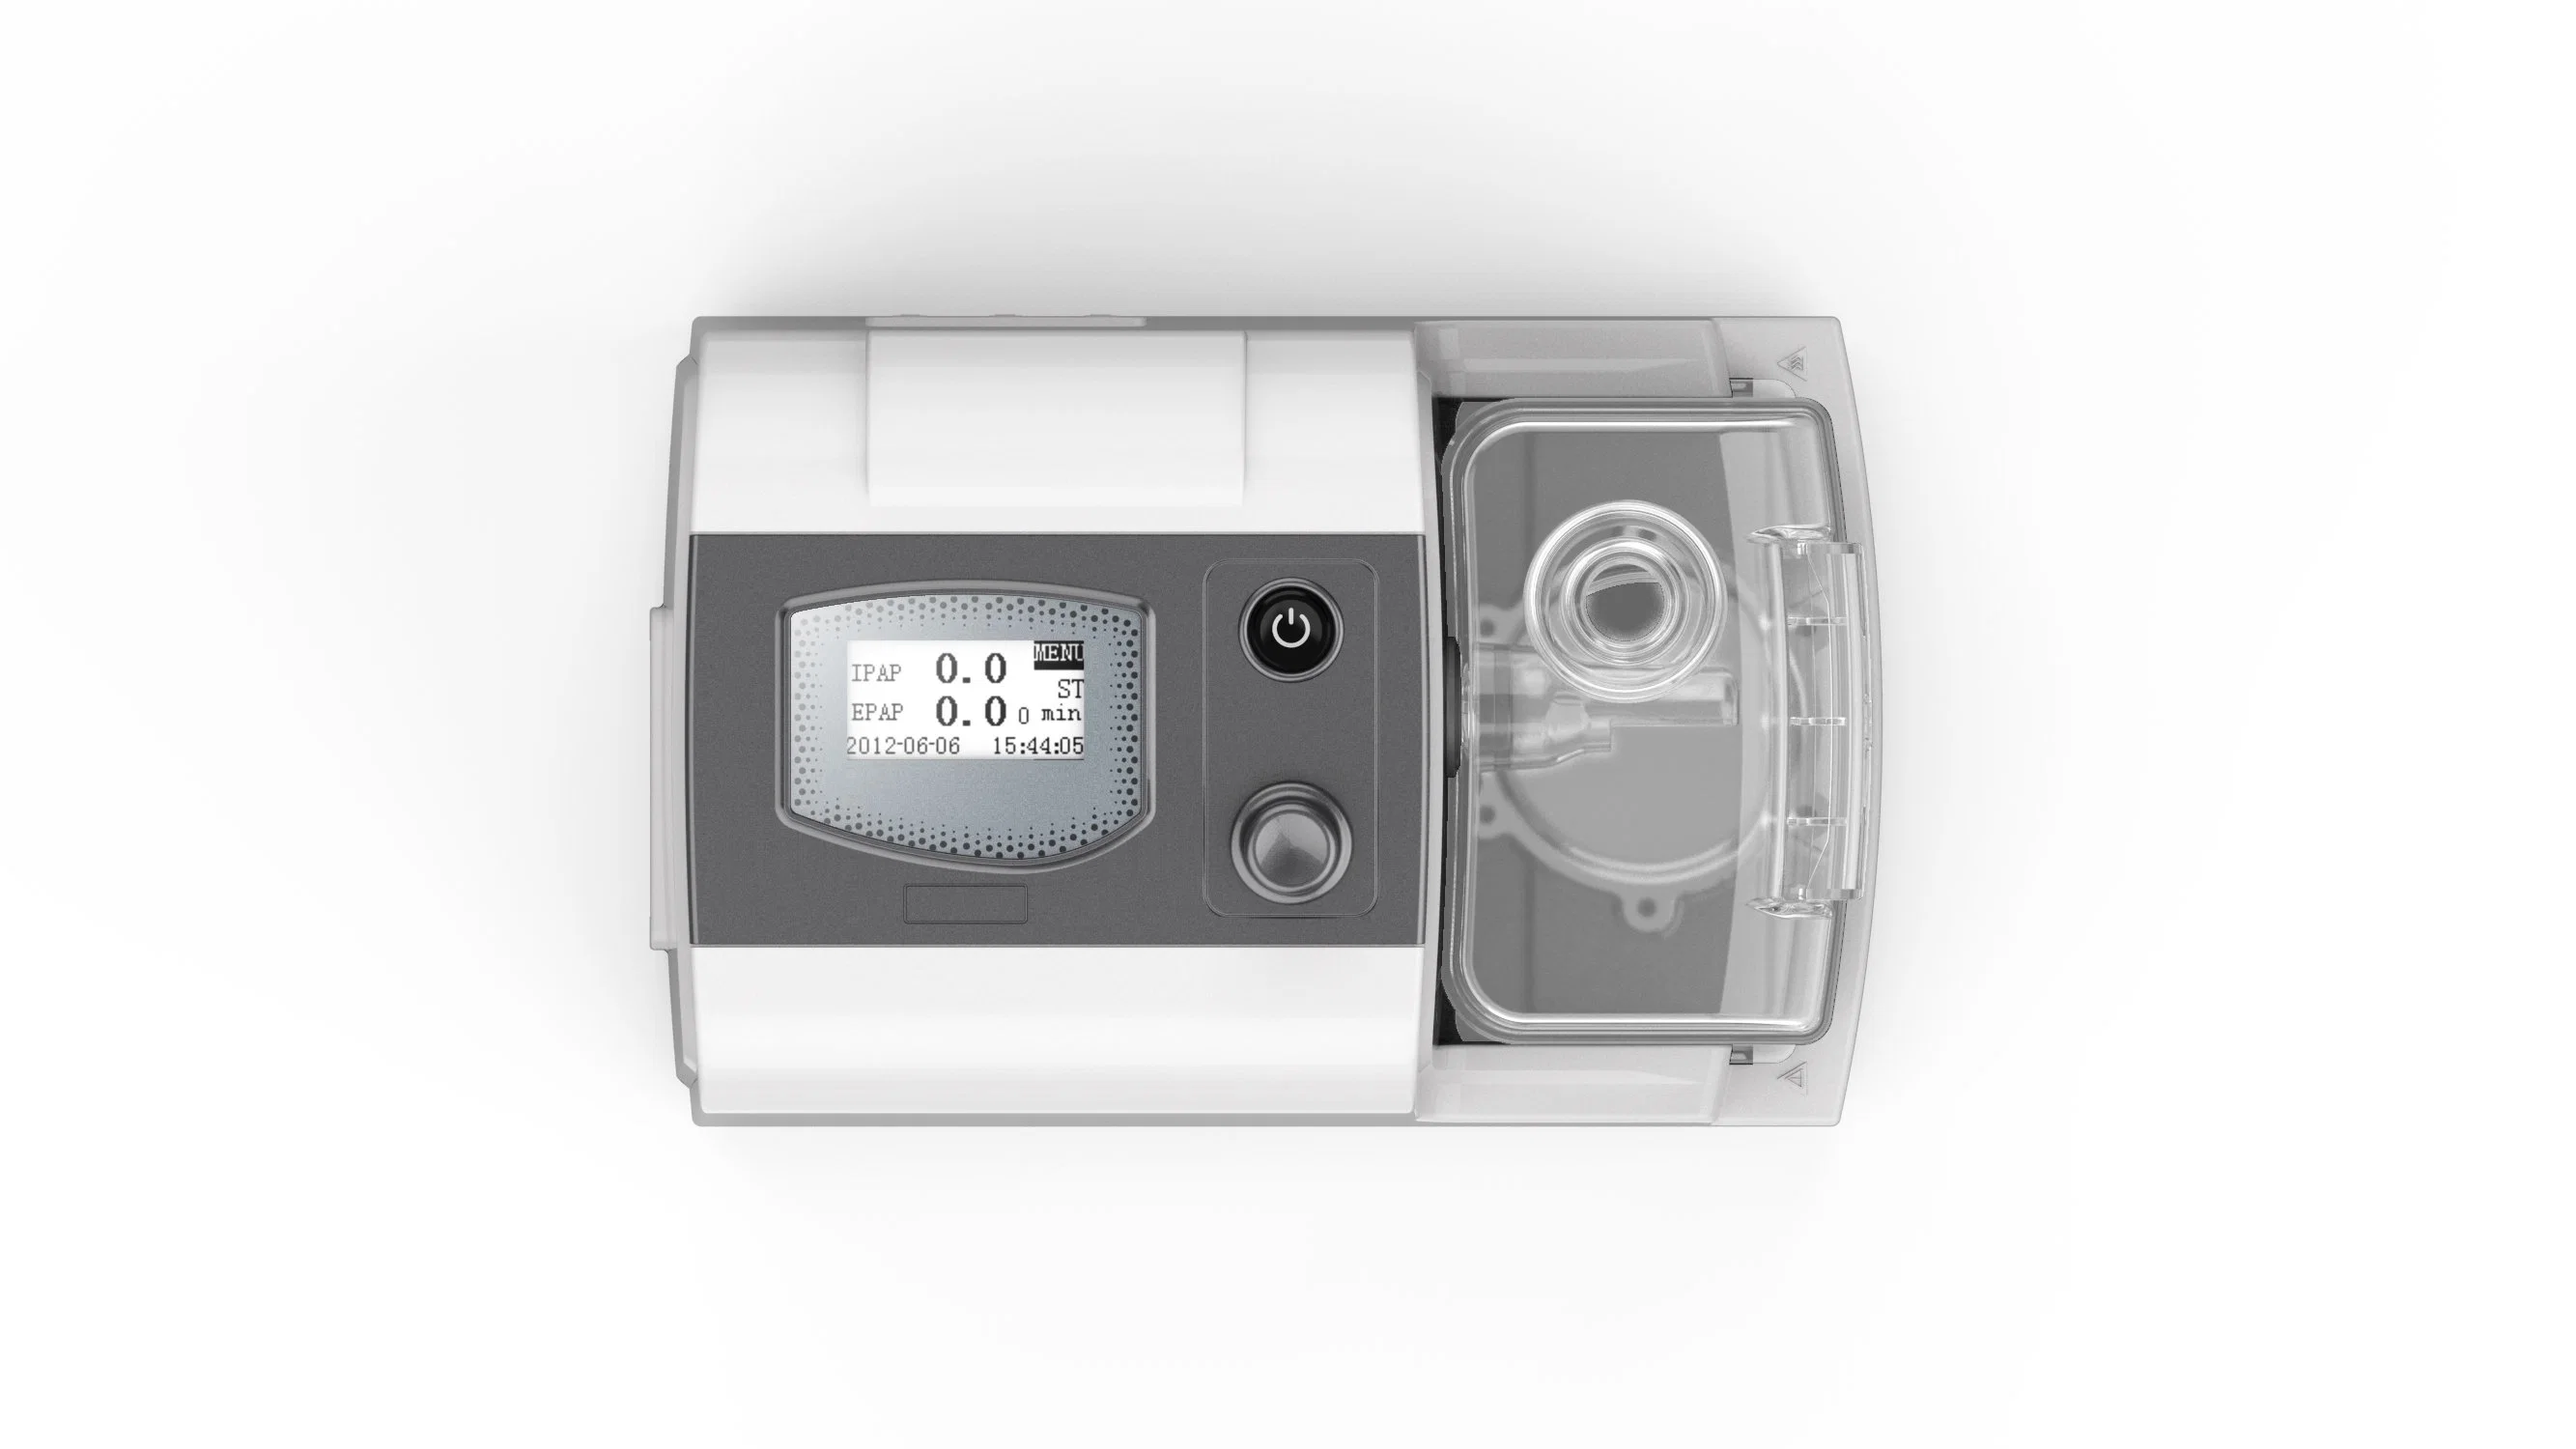 Portable Travel Auto CPAP Medical Sleep Apnea Respiratory Machine with Filter Tube Masque Headgear at Home Use